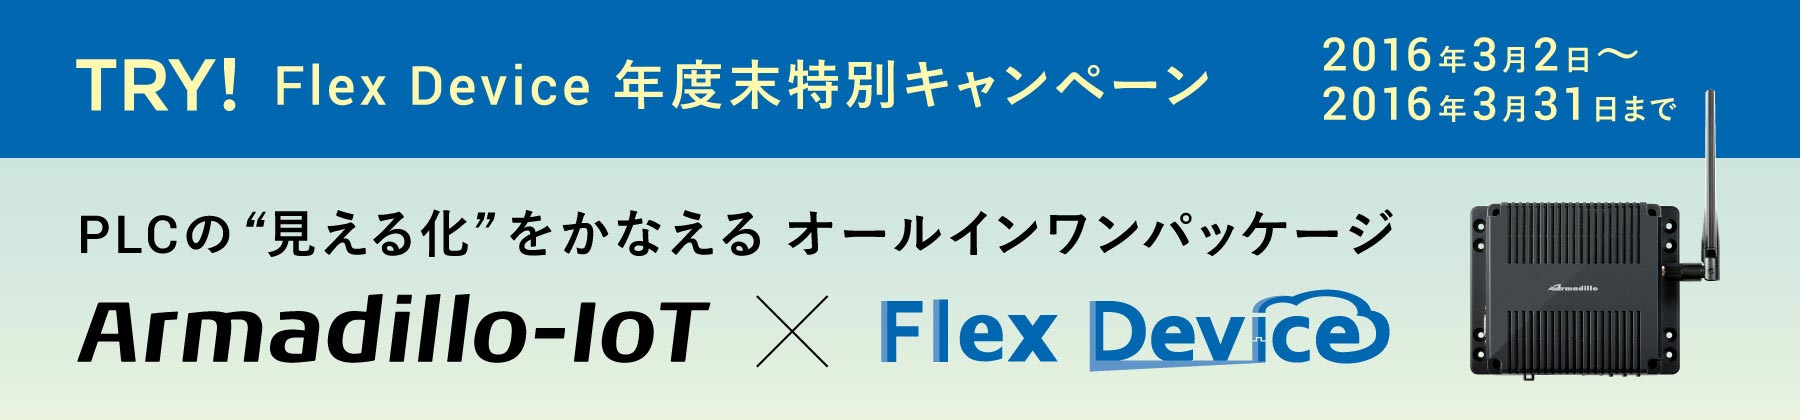 201603_flexdevice-02.jpg